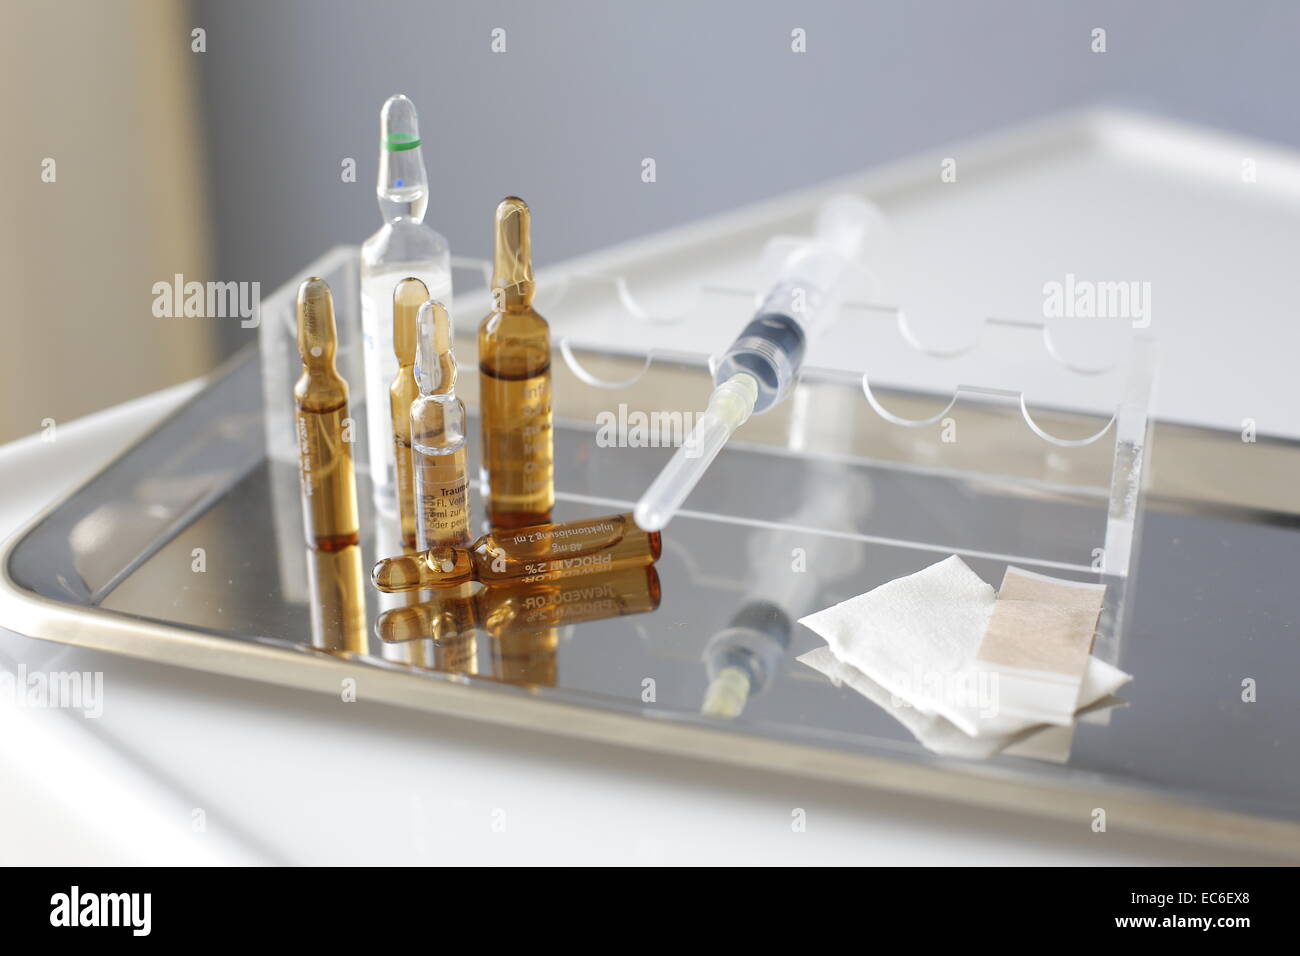 vial syringe tray medicine Stock Photo